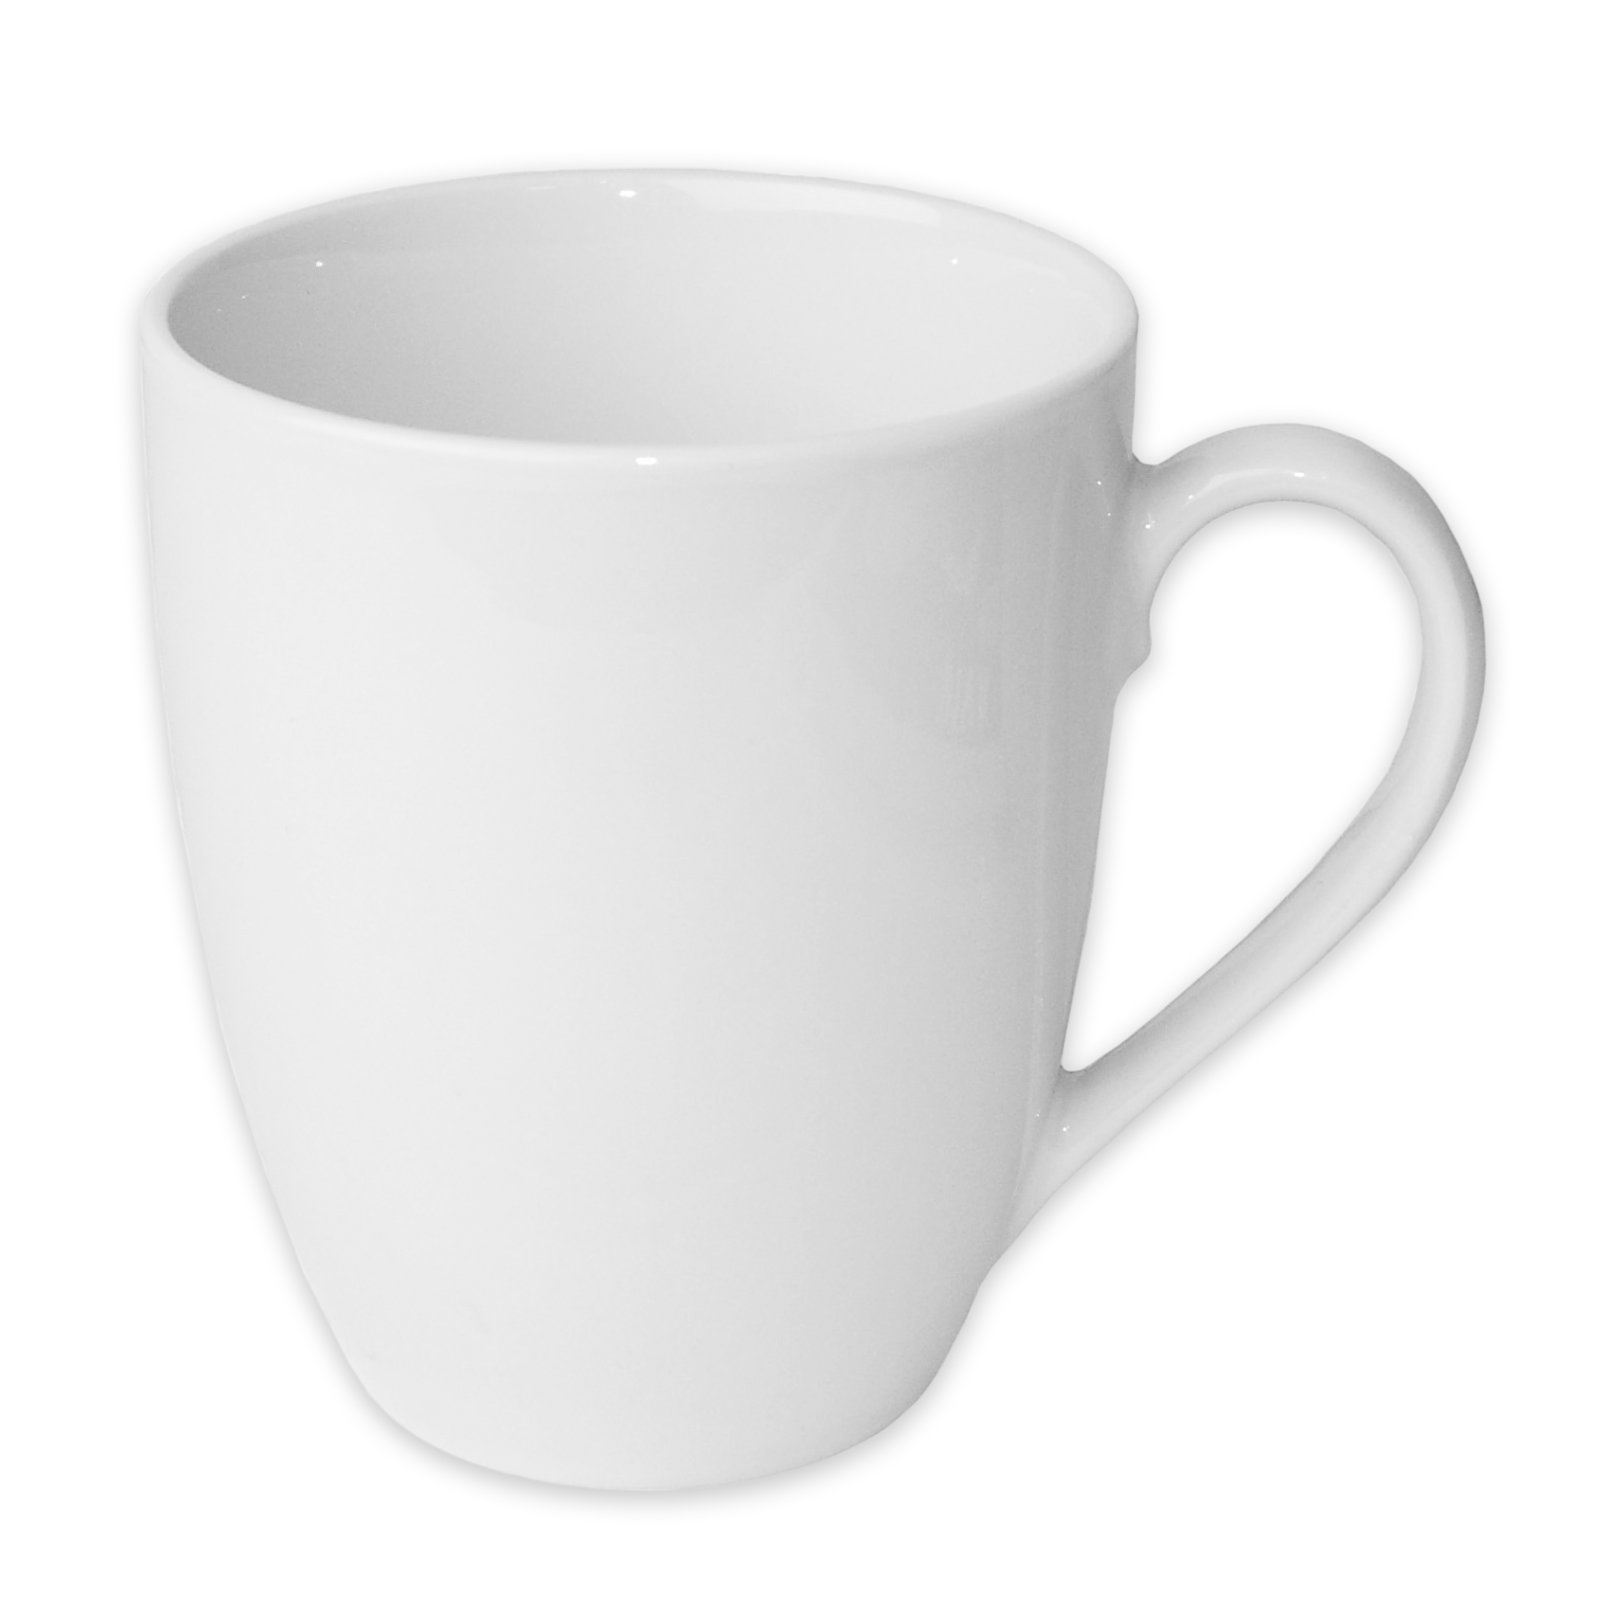 Kaffeebecher - weiß - Porzellan - 300 ml | Online bei ROLLER kaufen